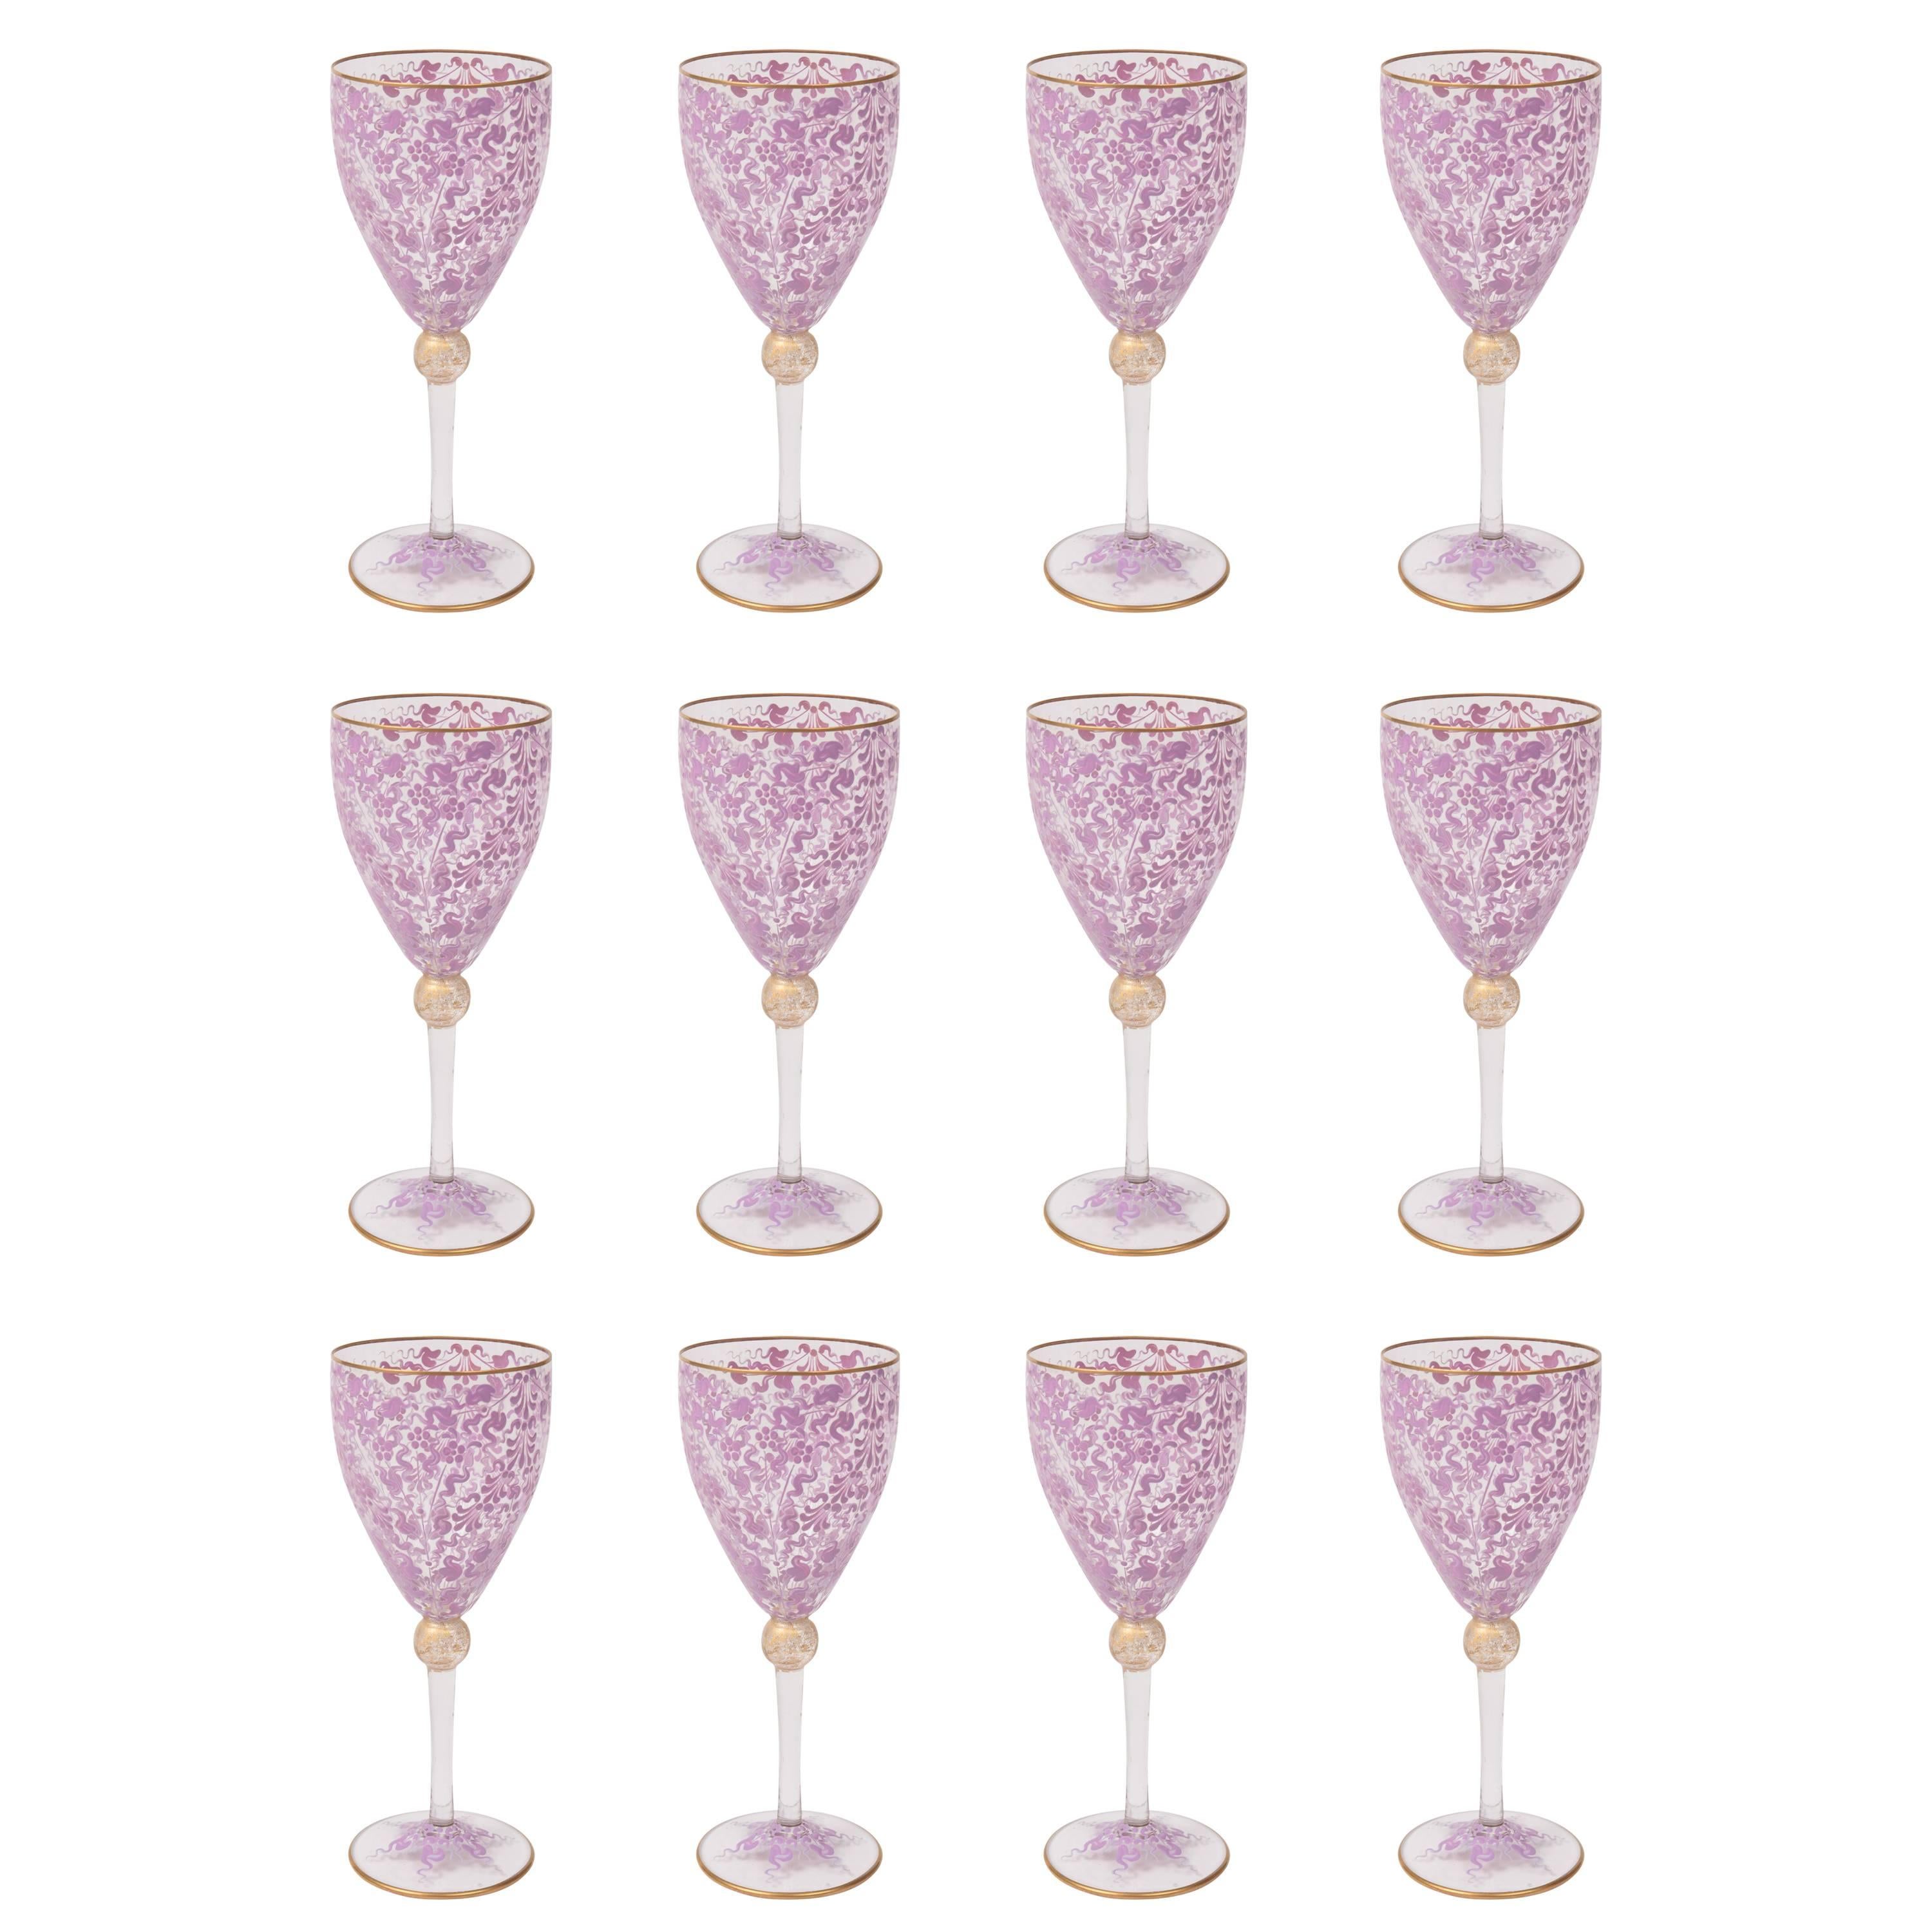 10 Vintage Venetian Pink Gilt Wine Glasses, Hand-Painted with 24-Karat Gold